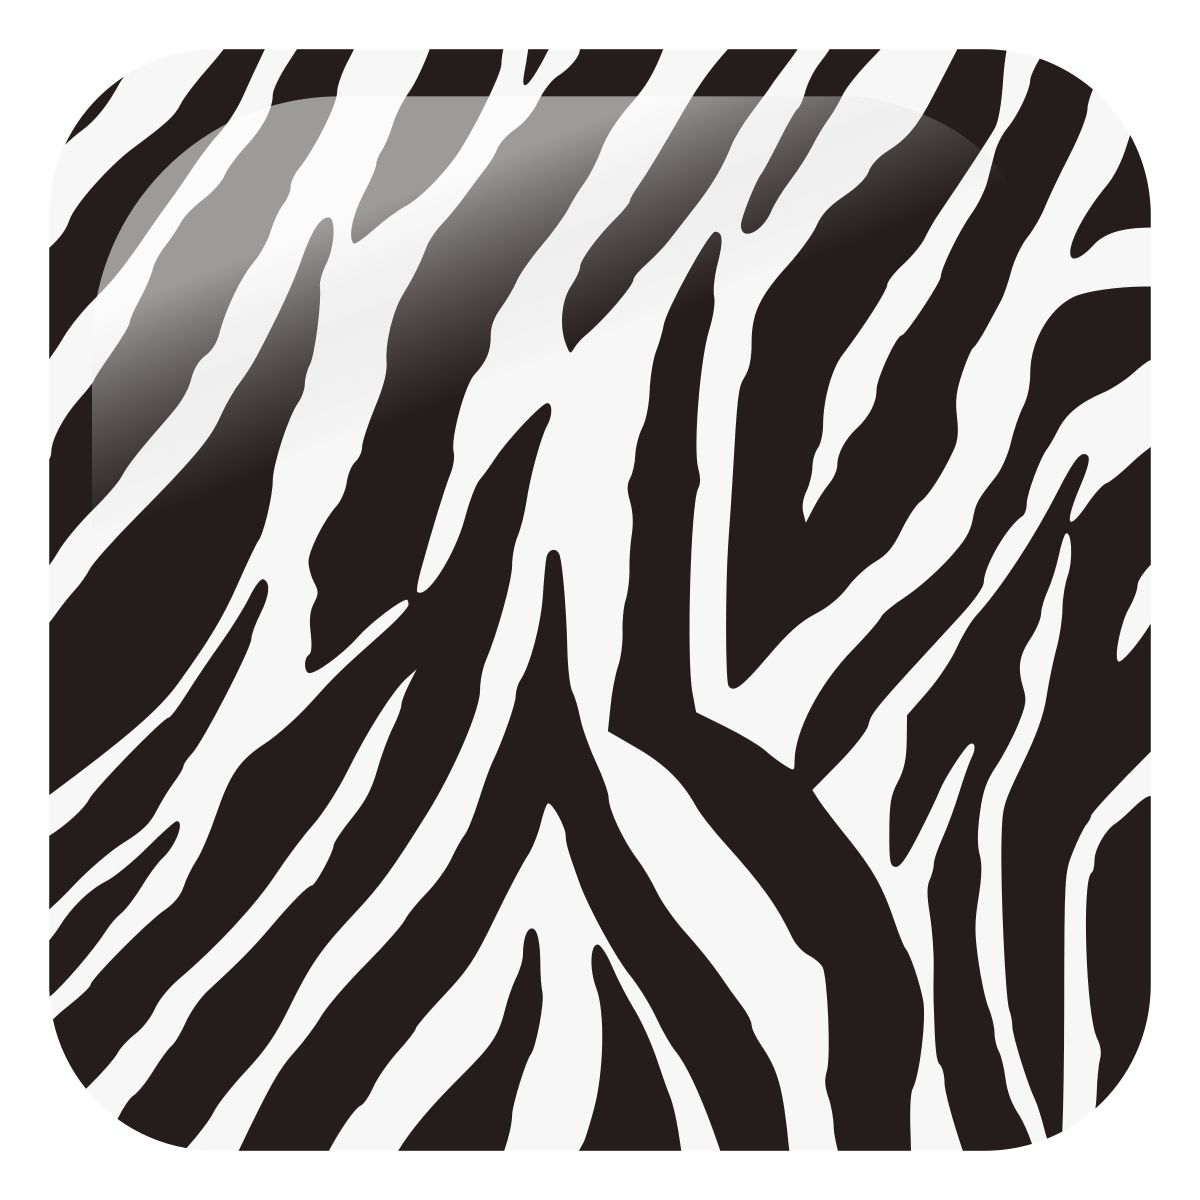 What are zebra stripe patterns?